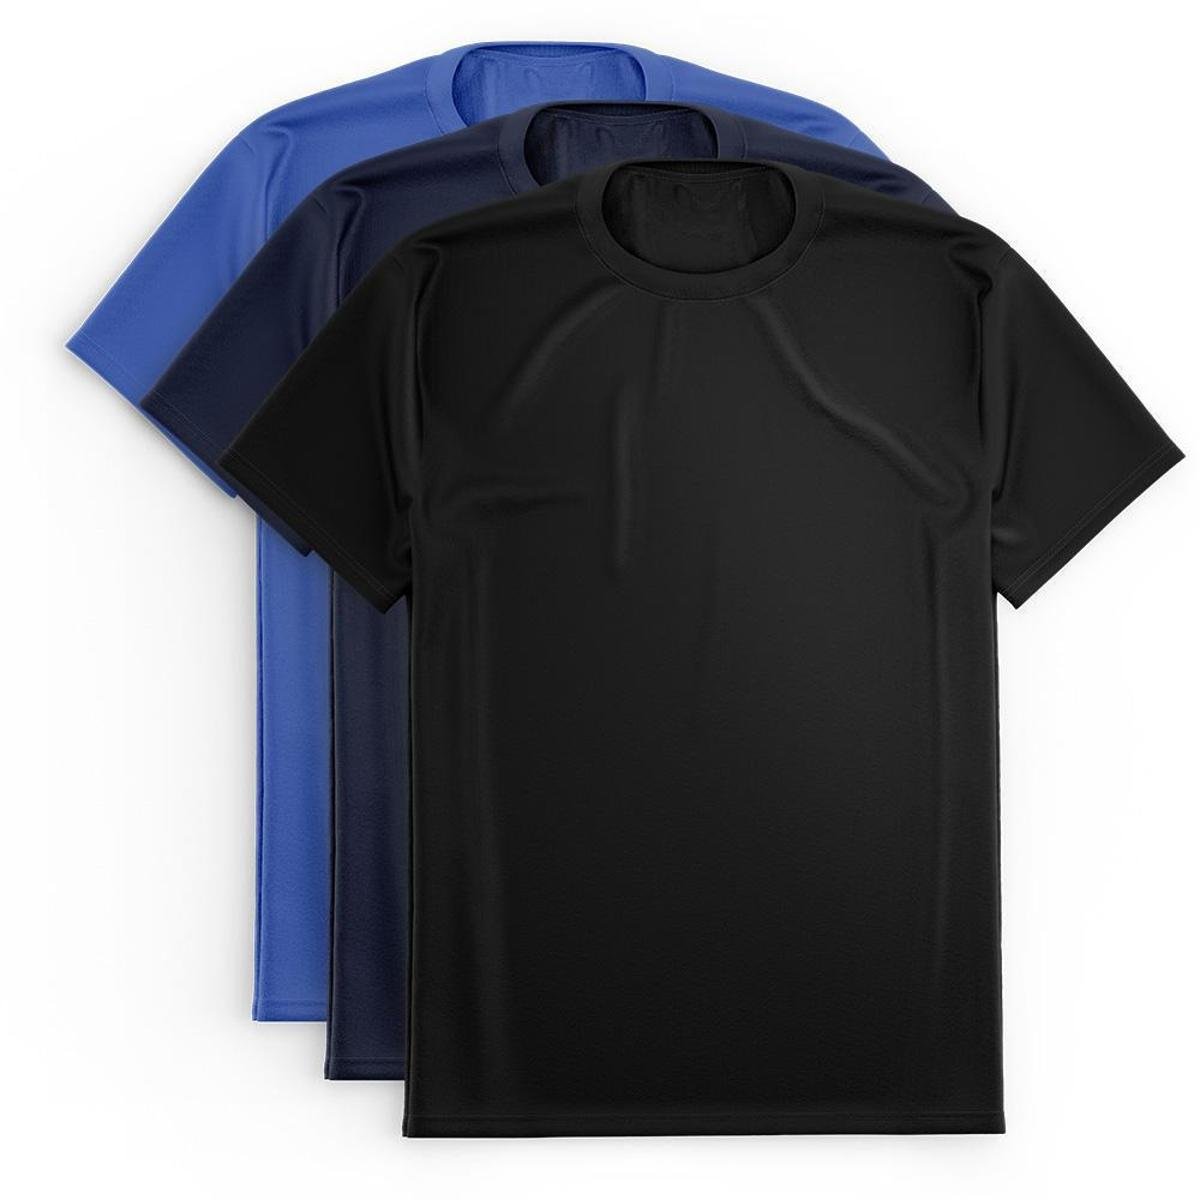 Kit 3 Camisetas Via Basic Dry Academia Proteção Solar UV Masculina